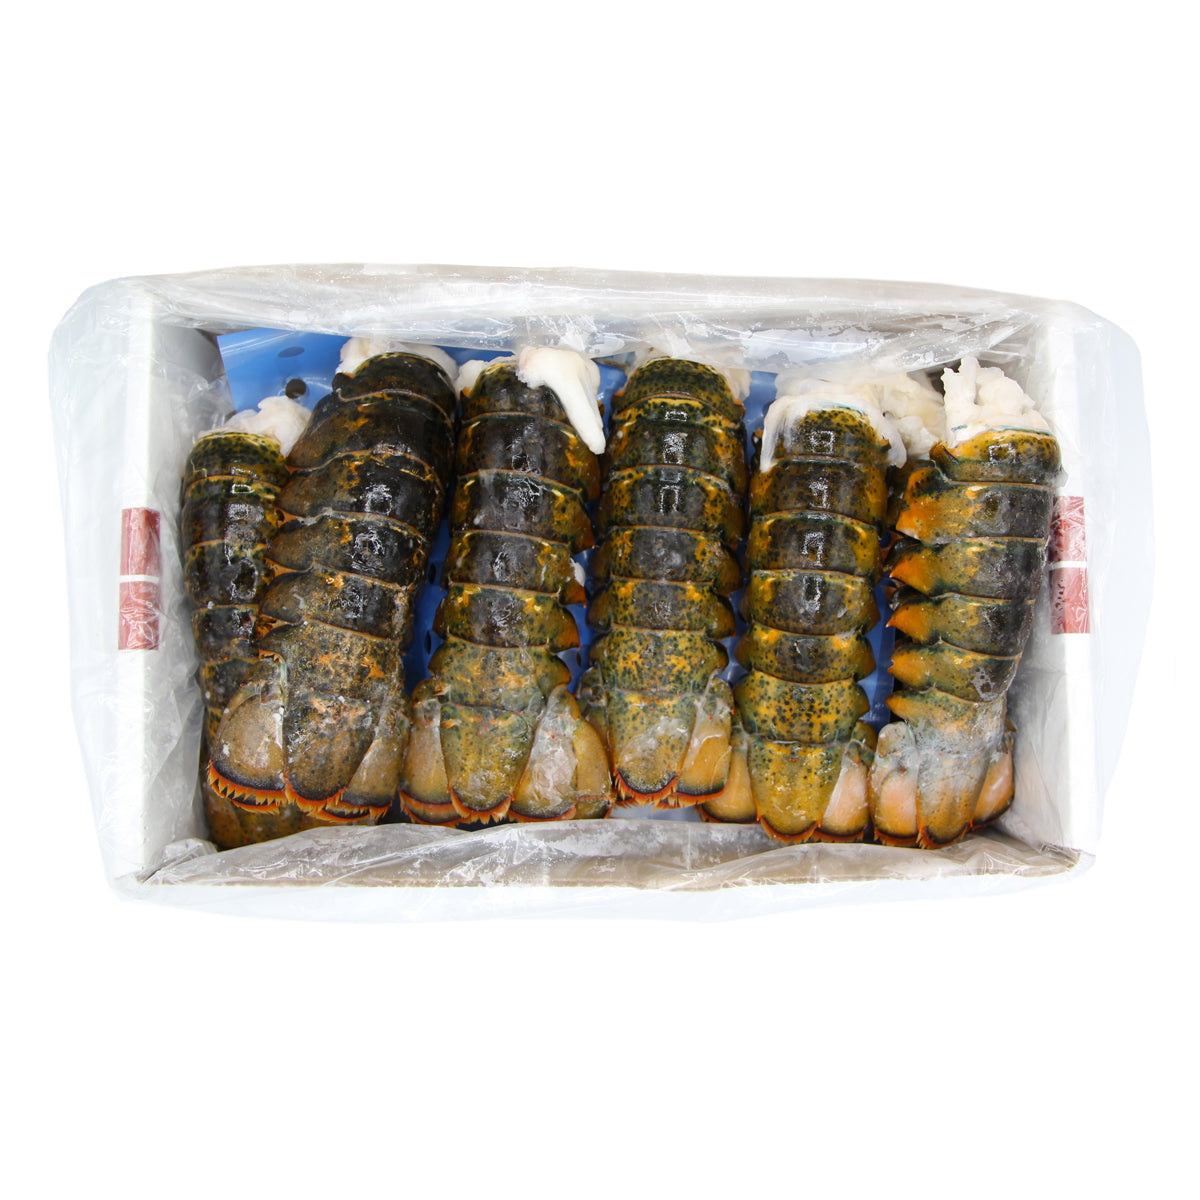 Greenhead Lobster Frozen Lobster Tails 5-6 OZ